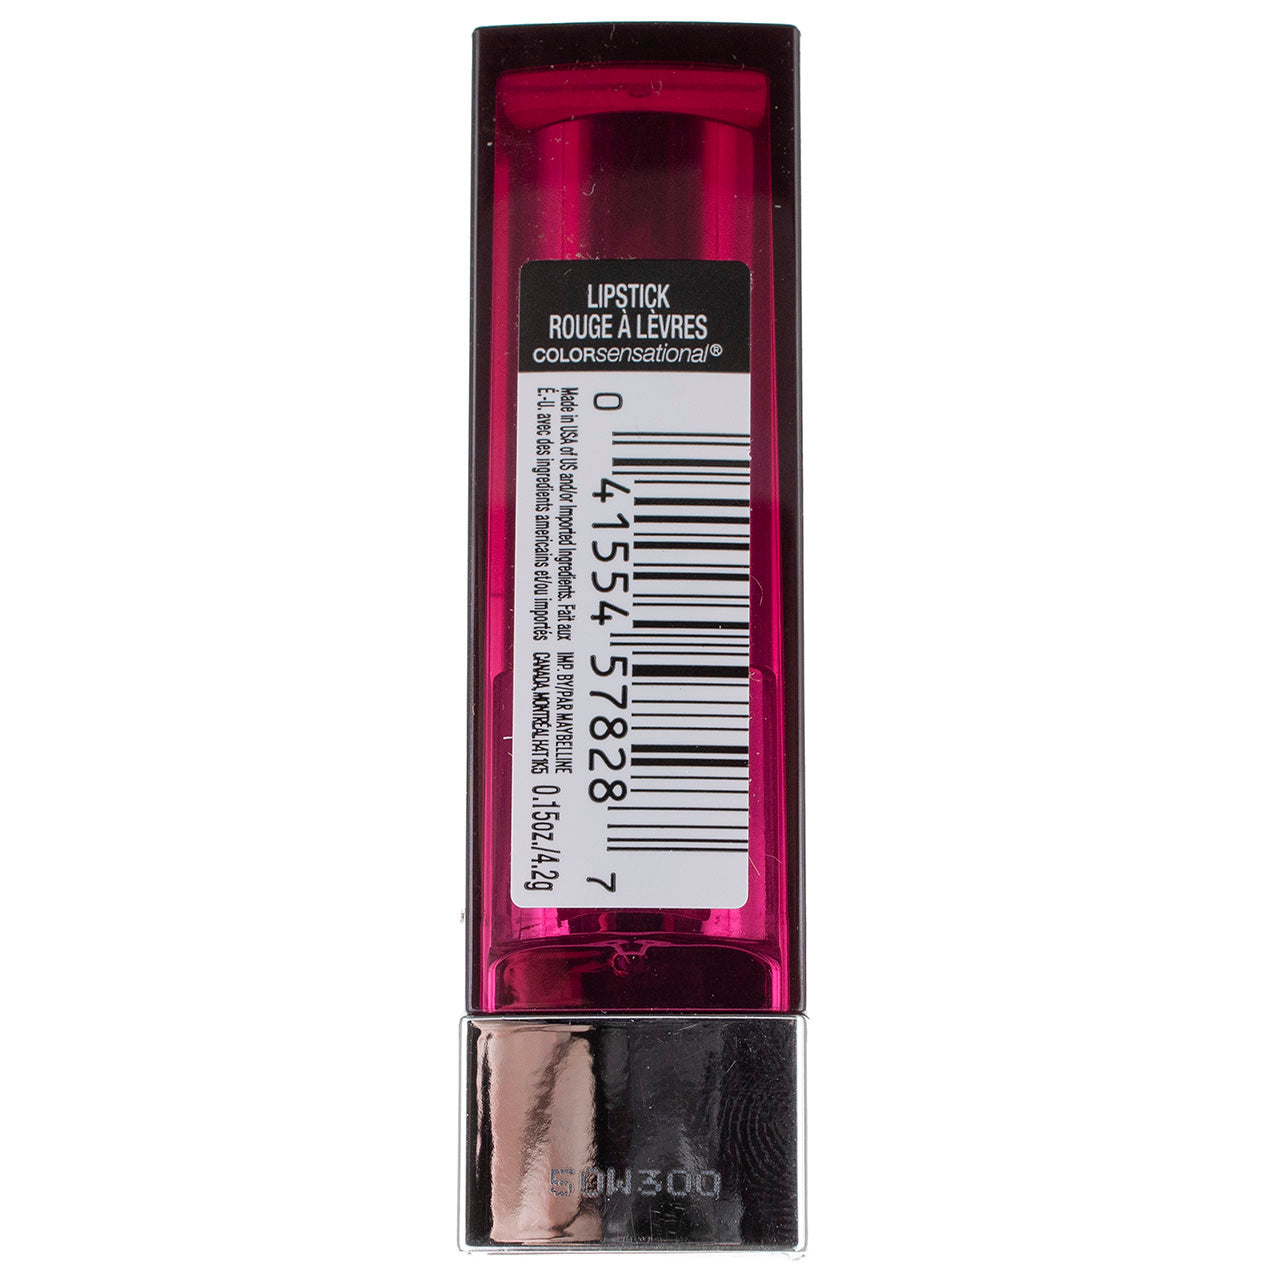 Maybelline Color PINK oz Lipstick 255, – Cream, Vitabox Sensational FLARE, 0.15